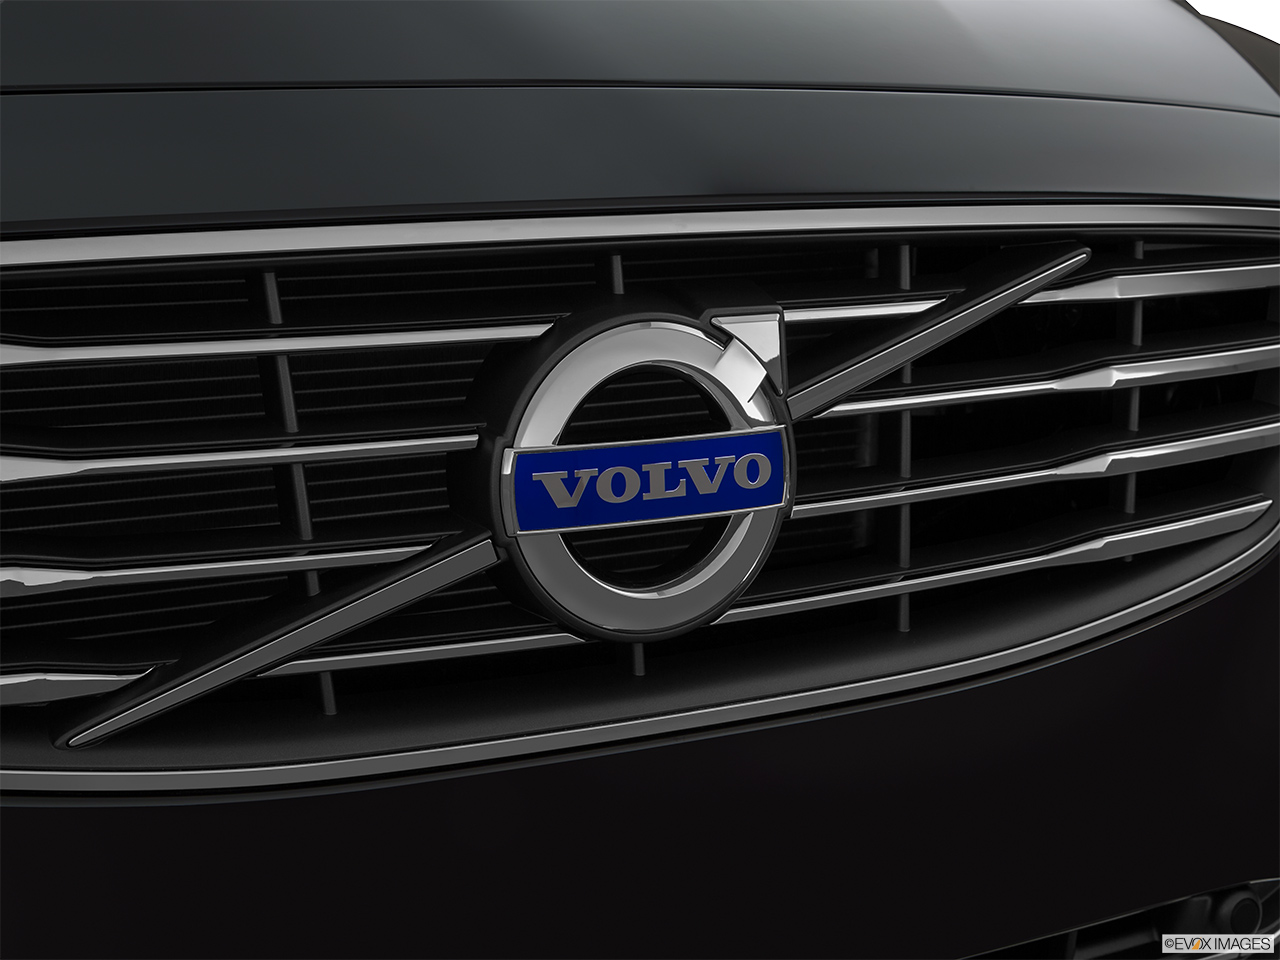 2016 Volvo S80 T5 Drive-E FWD Rear manufacture badge/emblem 